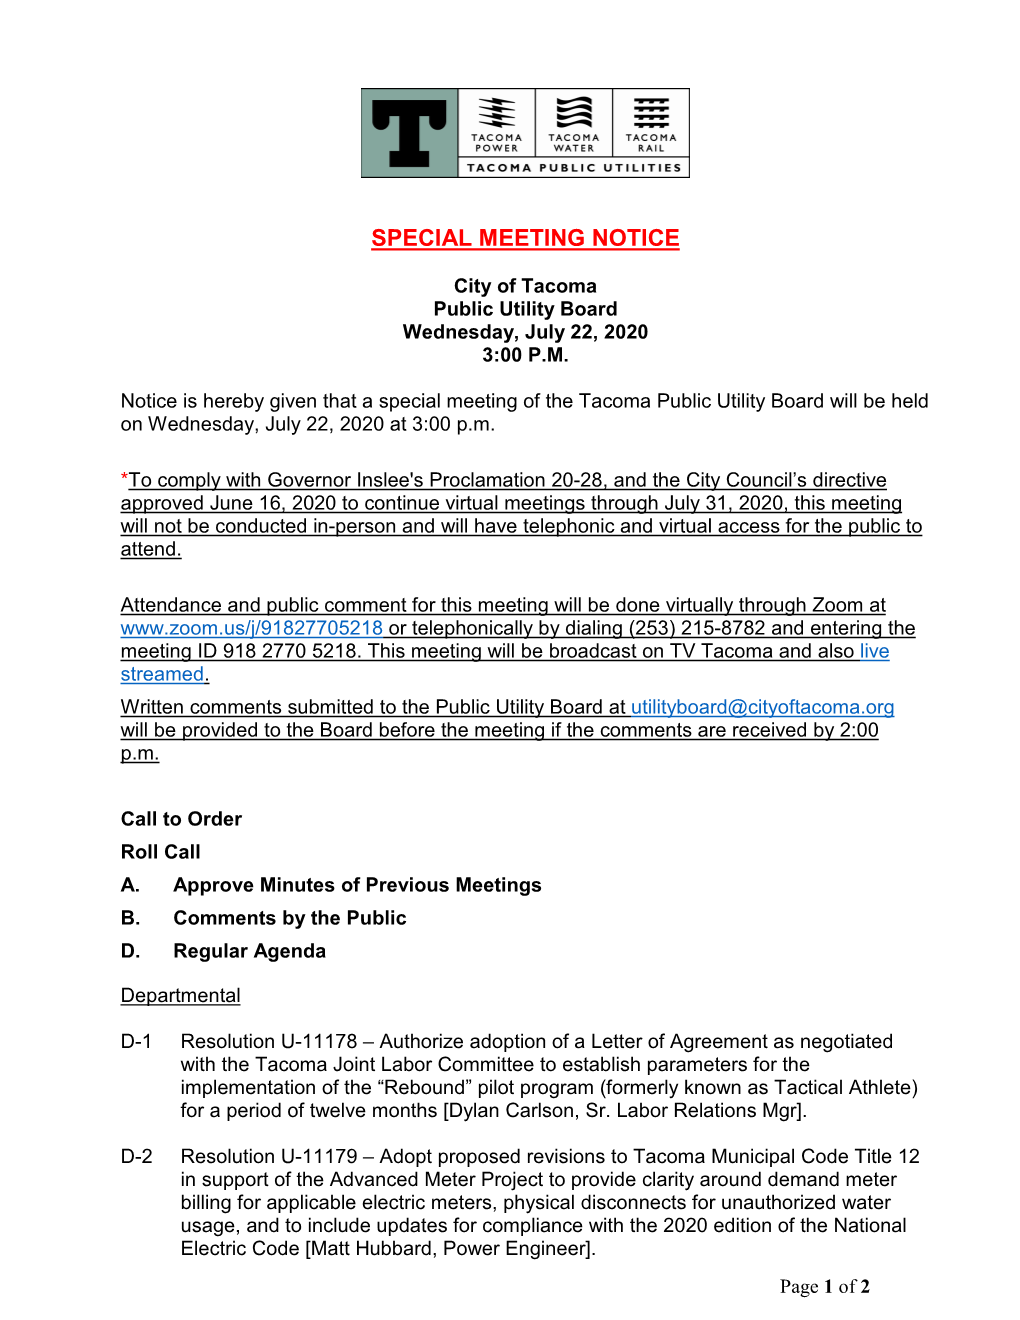 City of Tacoma Public Utility Board Wednesday, July 22, 2020 3:00 P.M